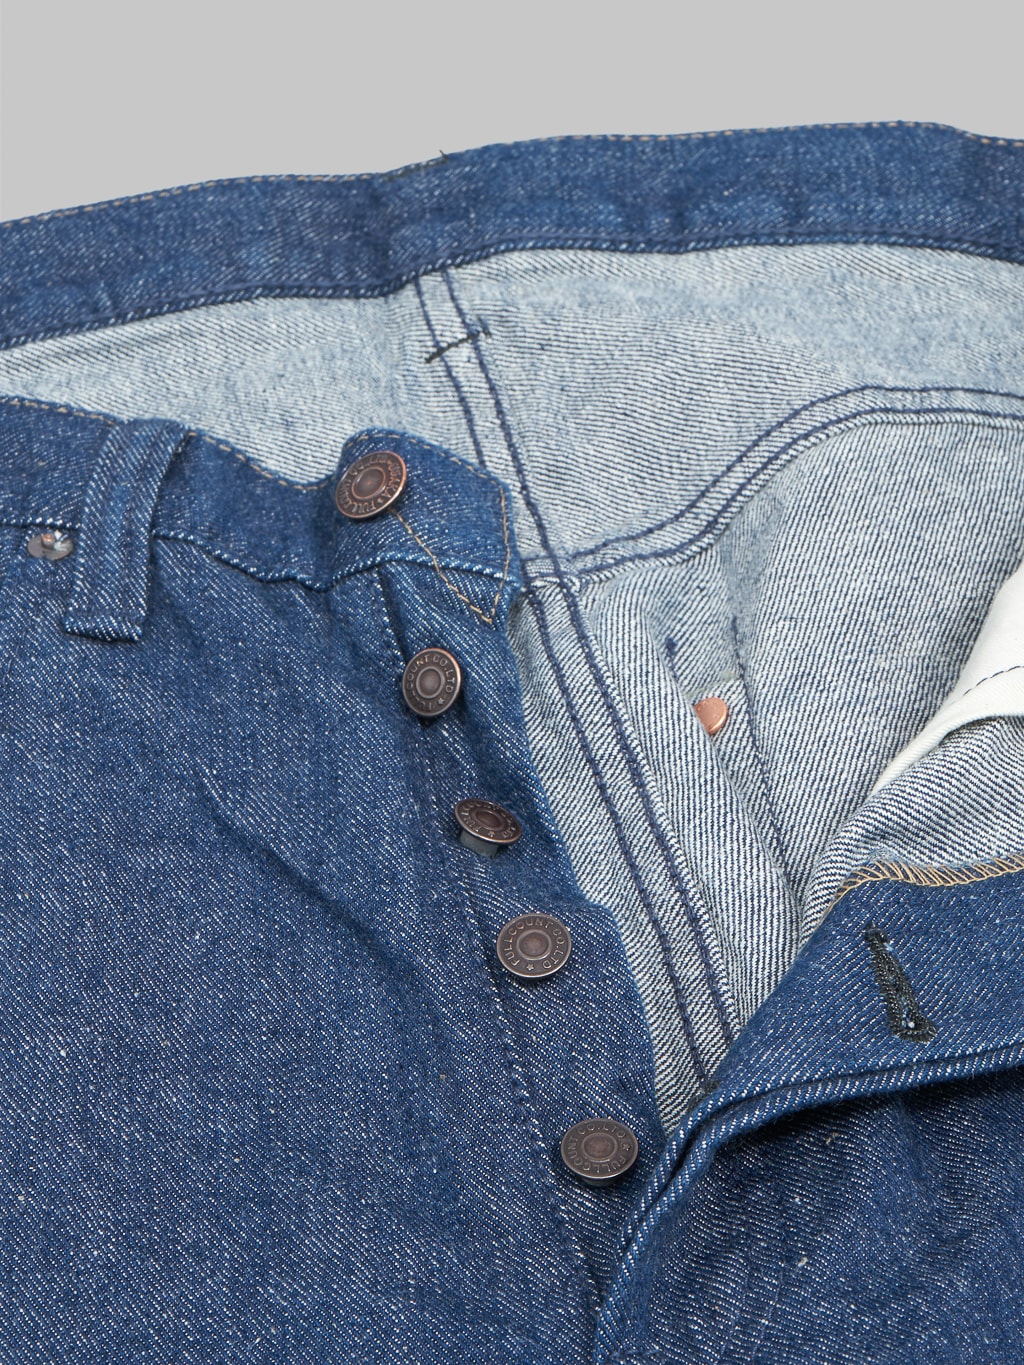 fullcount 1121 duke original selvedge denim super wide jeans buttons